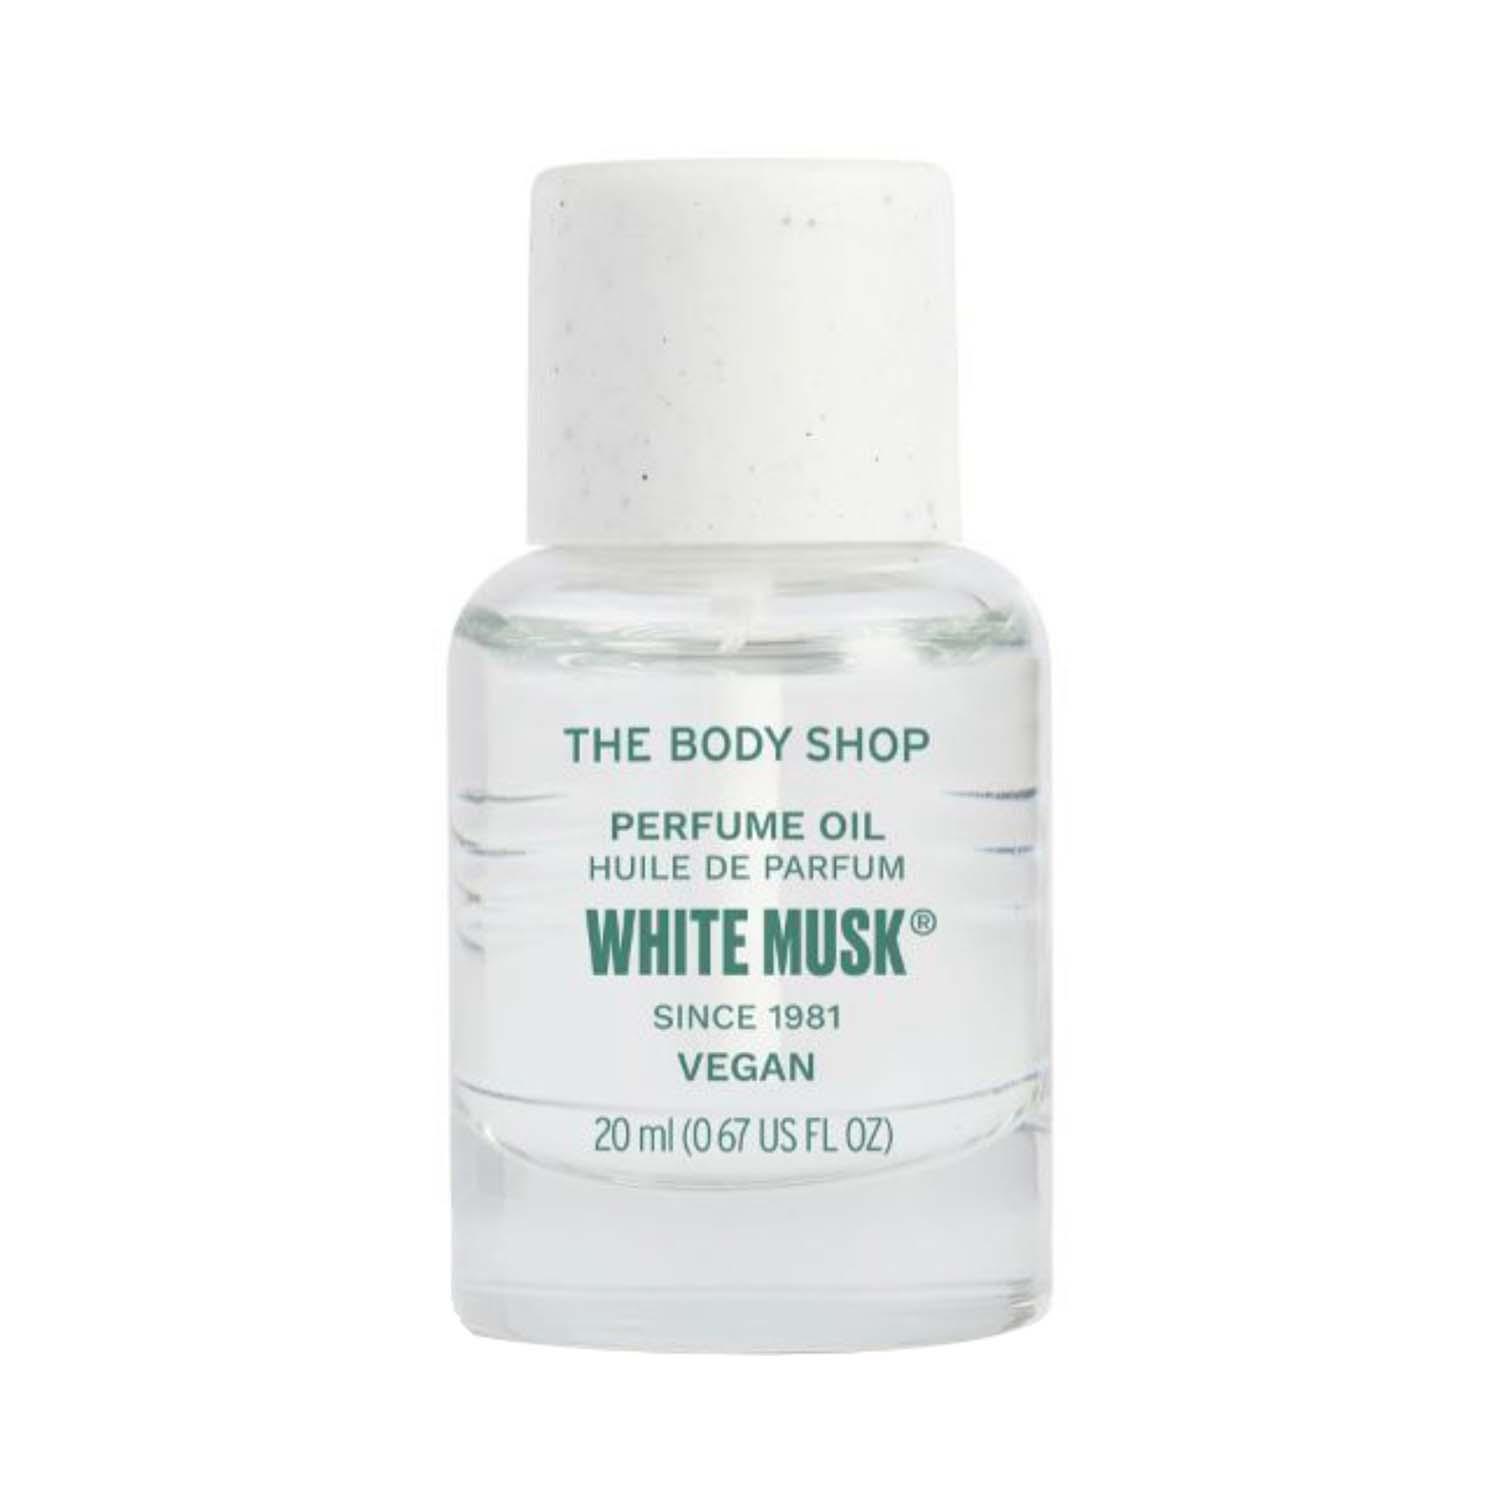 The Body Shop | The Body Shop White Musk Perfume Oil (20ml)